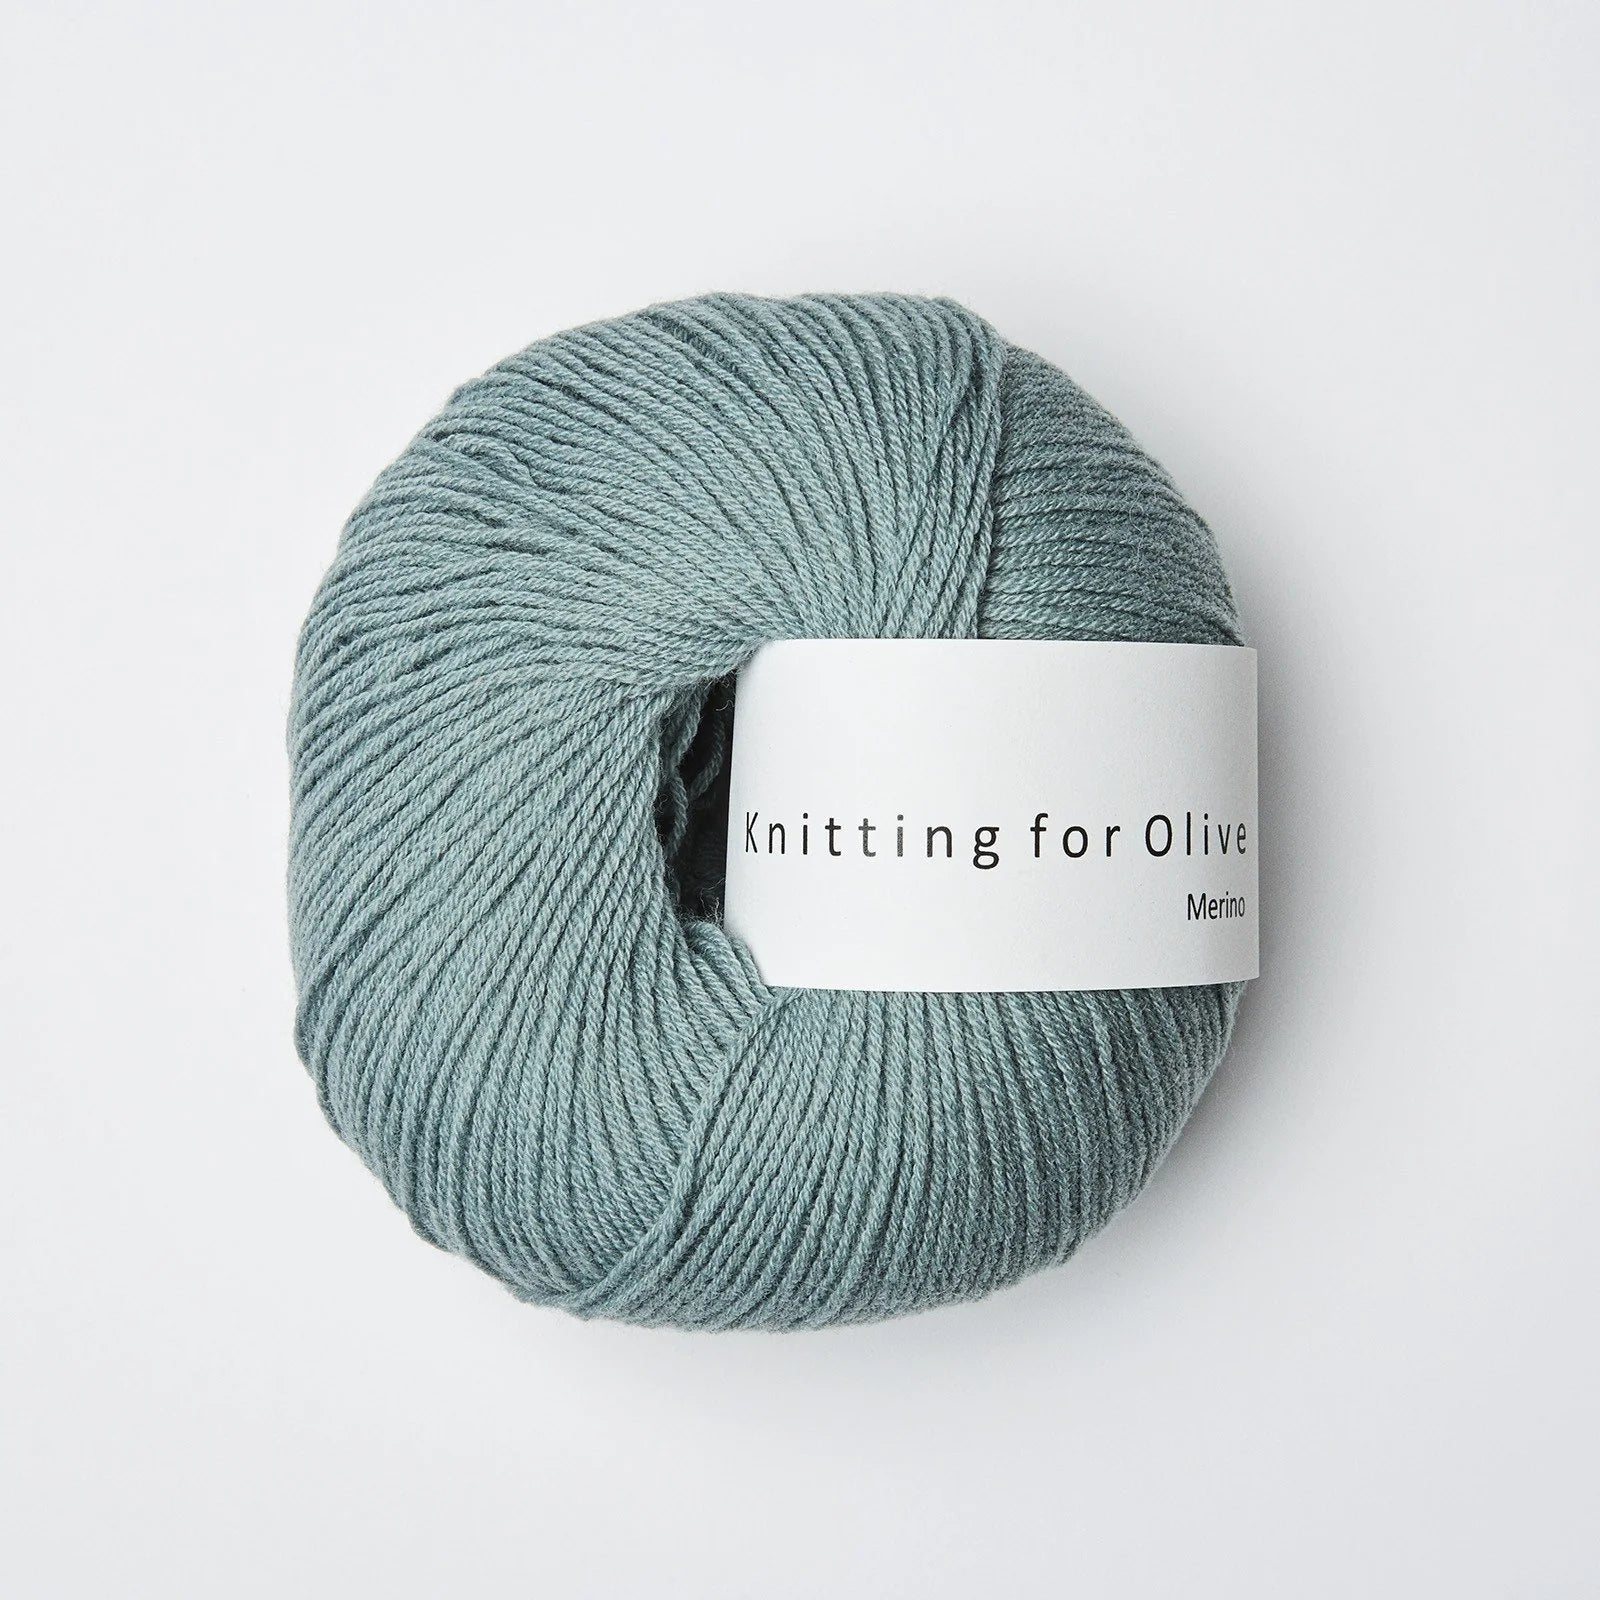 Knitting for Olive Merino - Knitting for Olive - Dusty Aqua - The Little Yarn Store